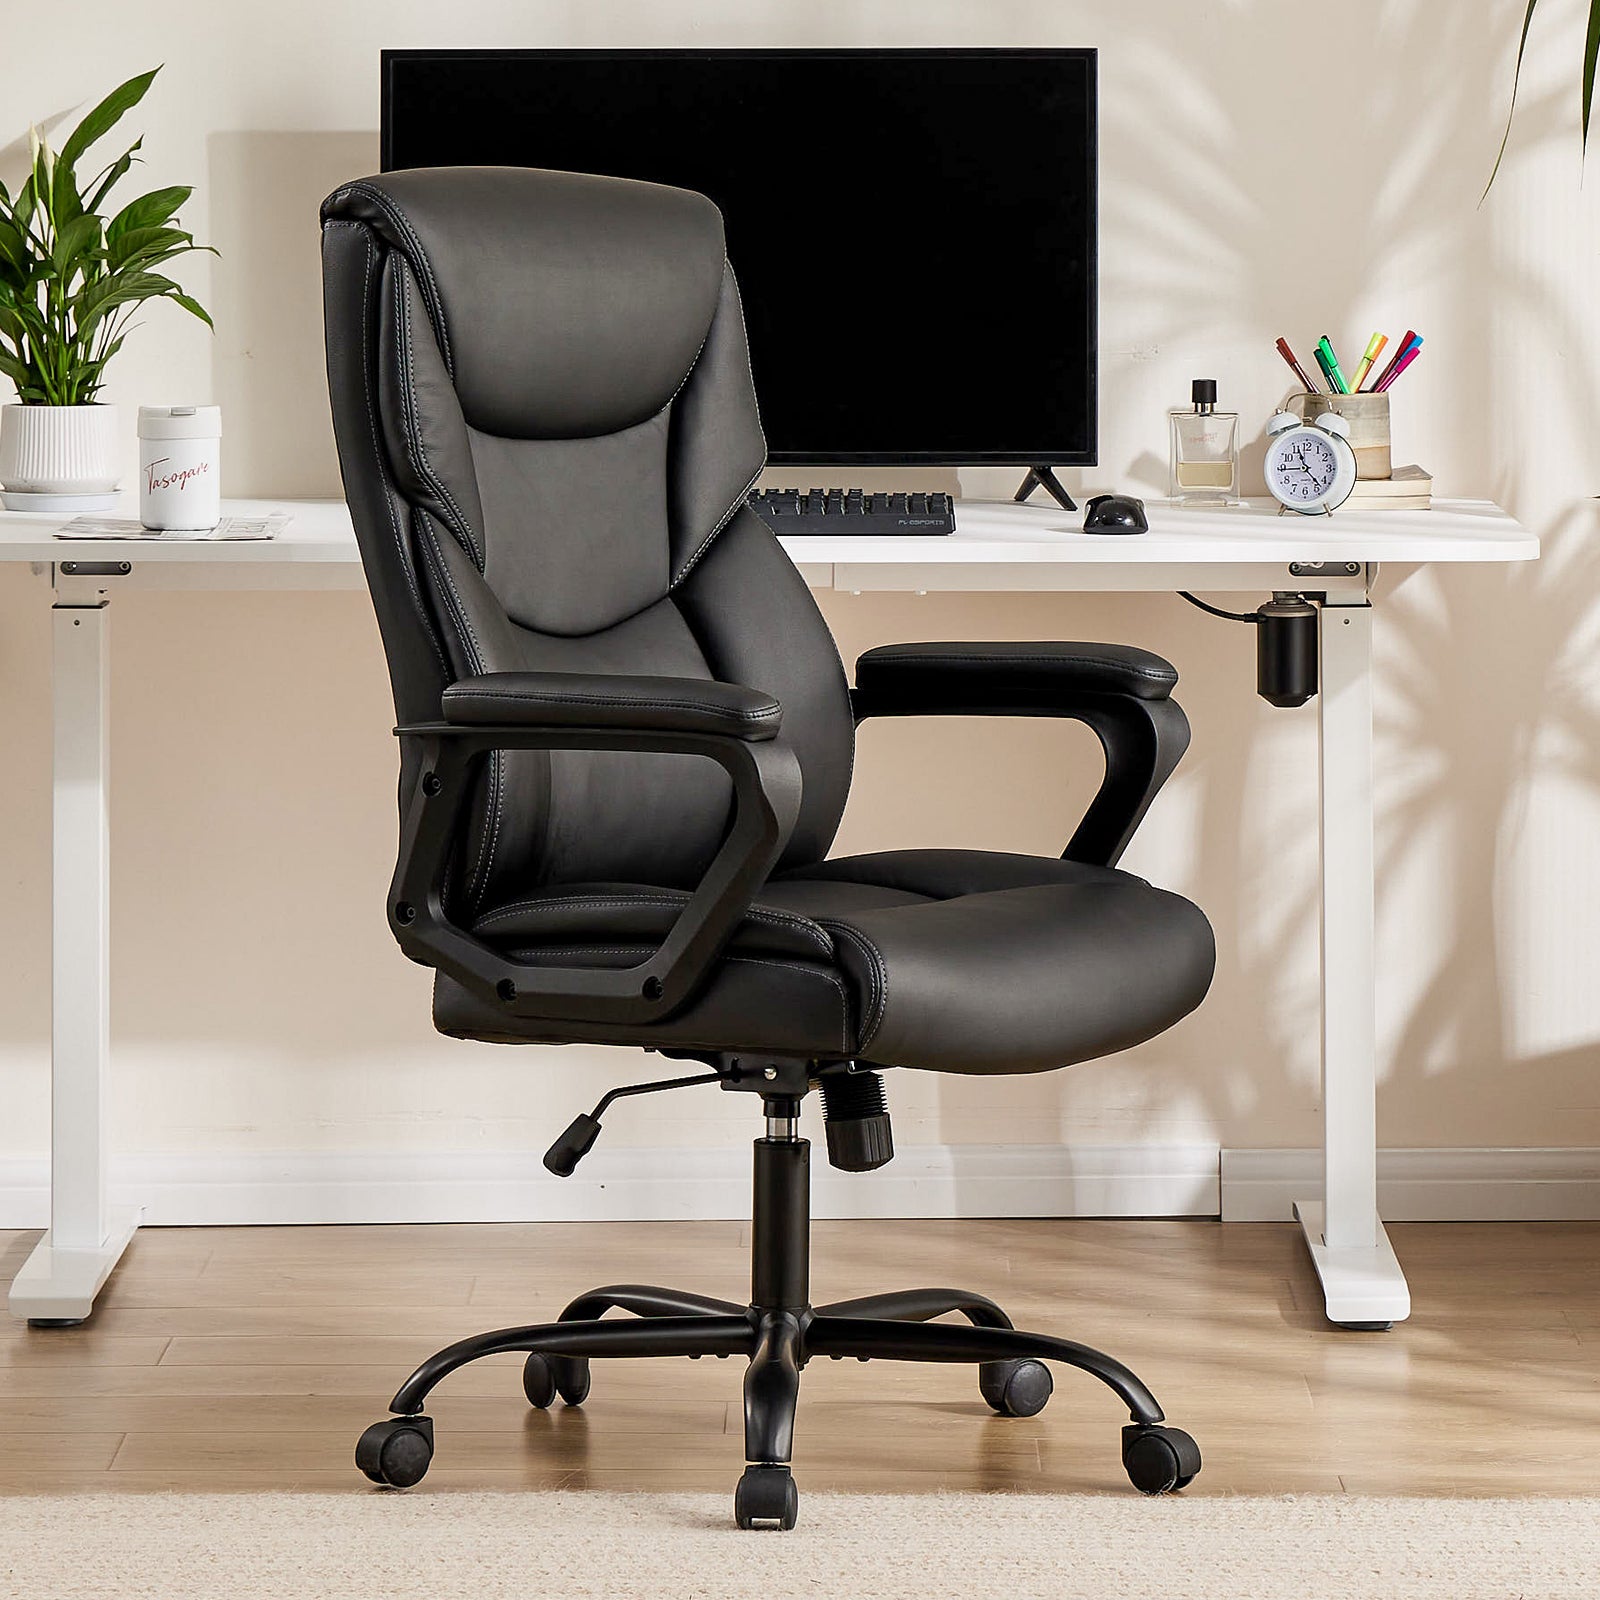 Sweetcrispy Home Office Chair Ergonomic PU Leather gray-pu leather